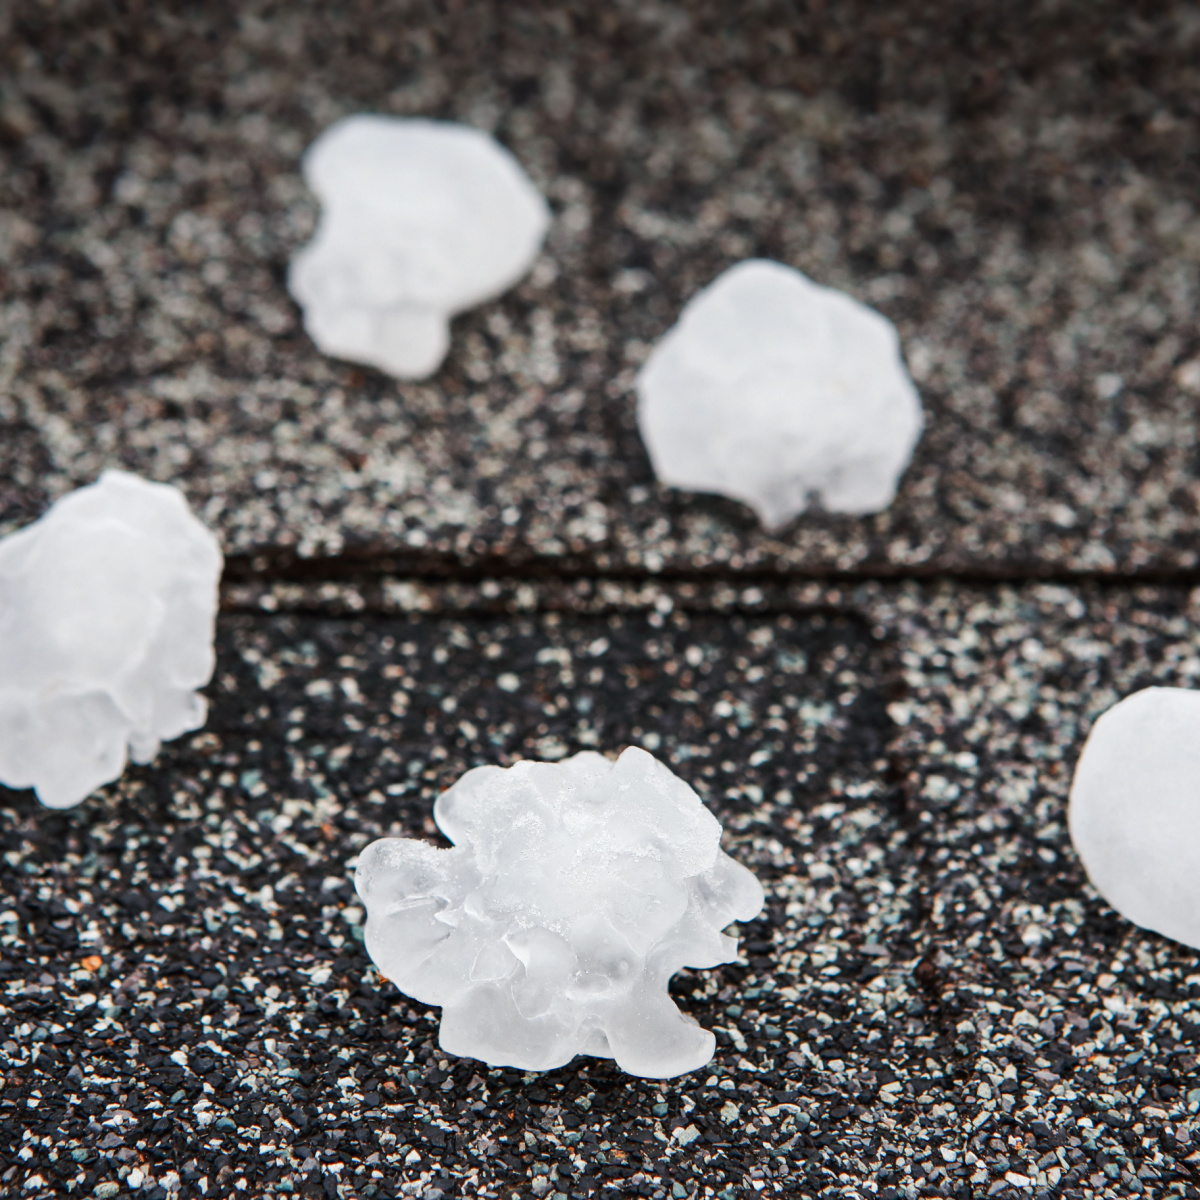 Golf ball size hail found in Round Rock roof.